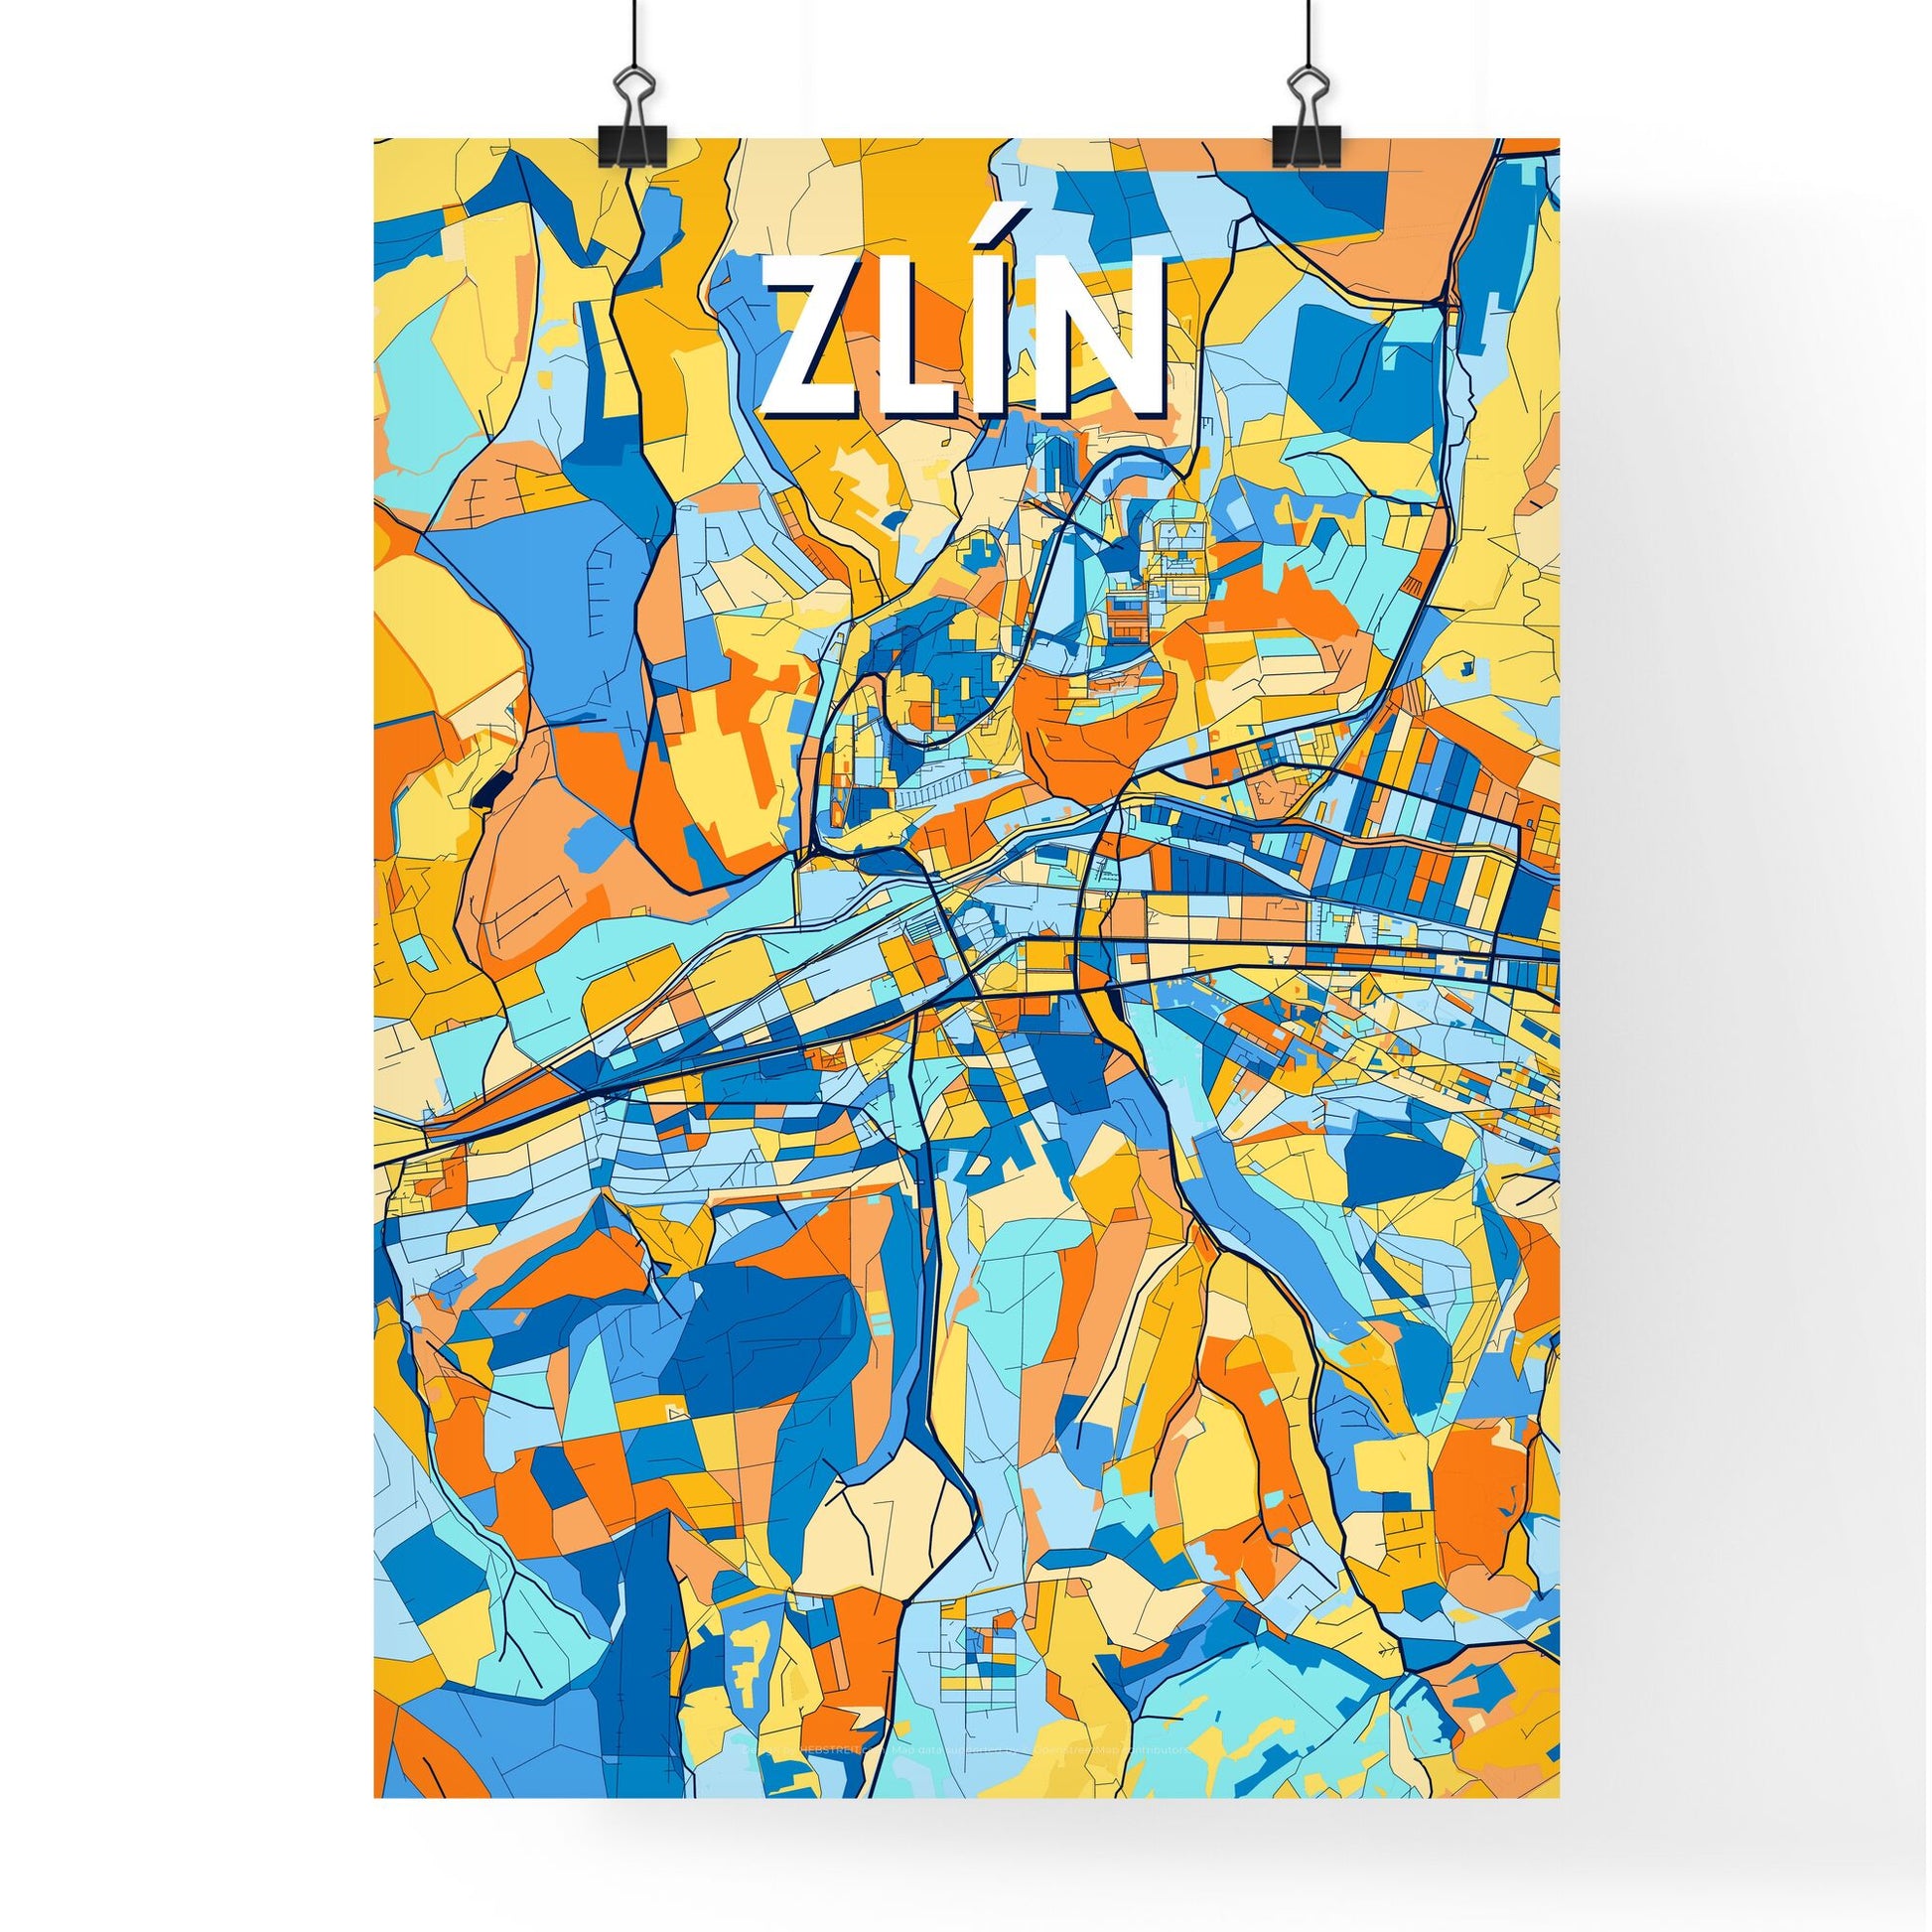 ZLÍN CZECHIA Vibrant Colorful Art Map Poster Blue Orange